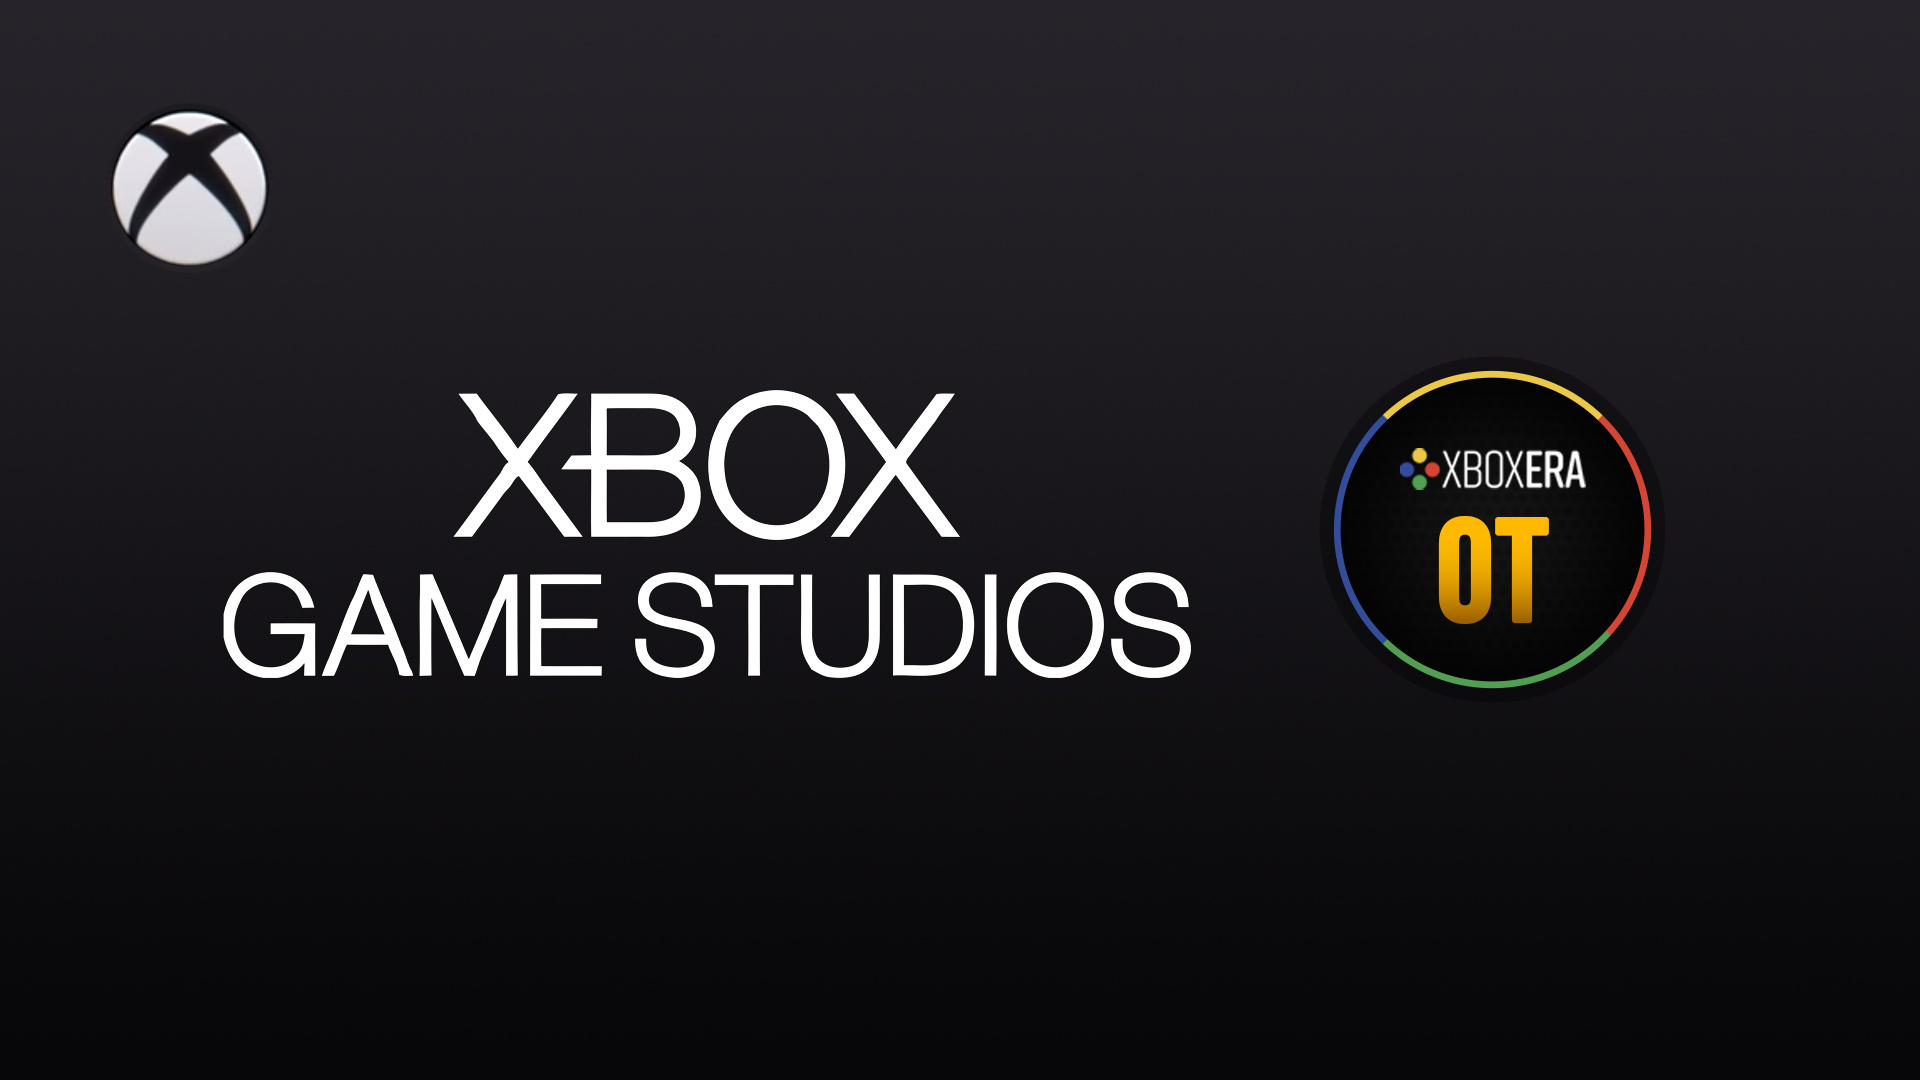 Xbox Game Studios Publishing